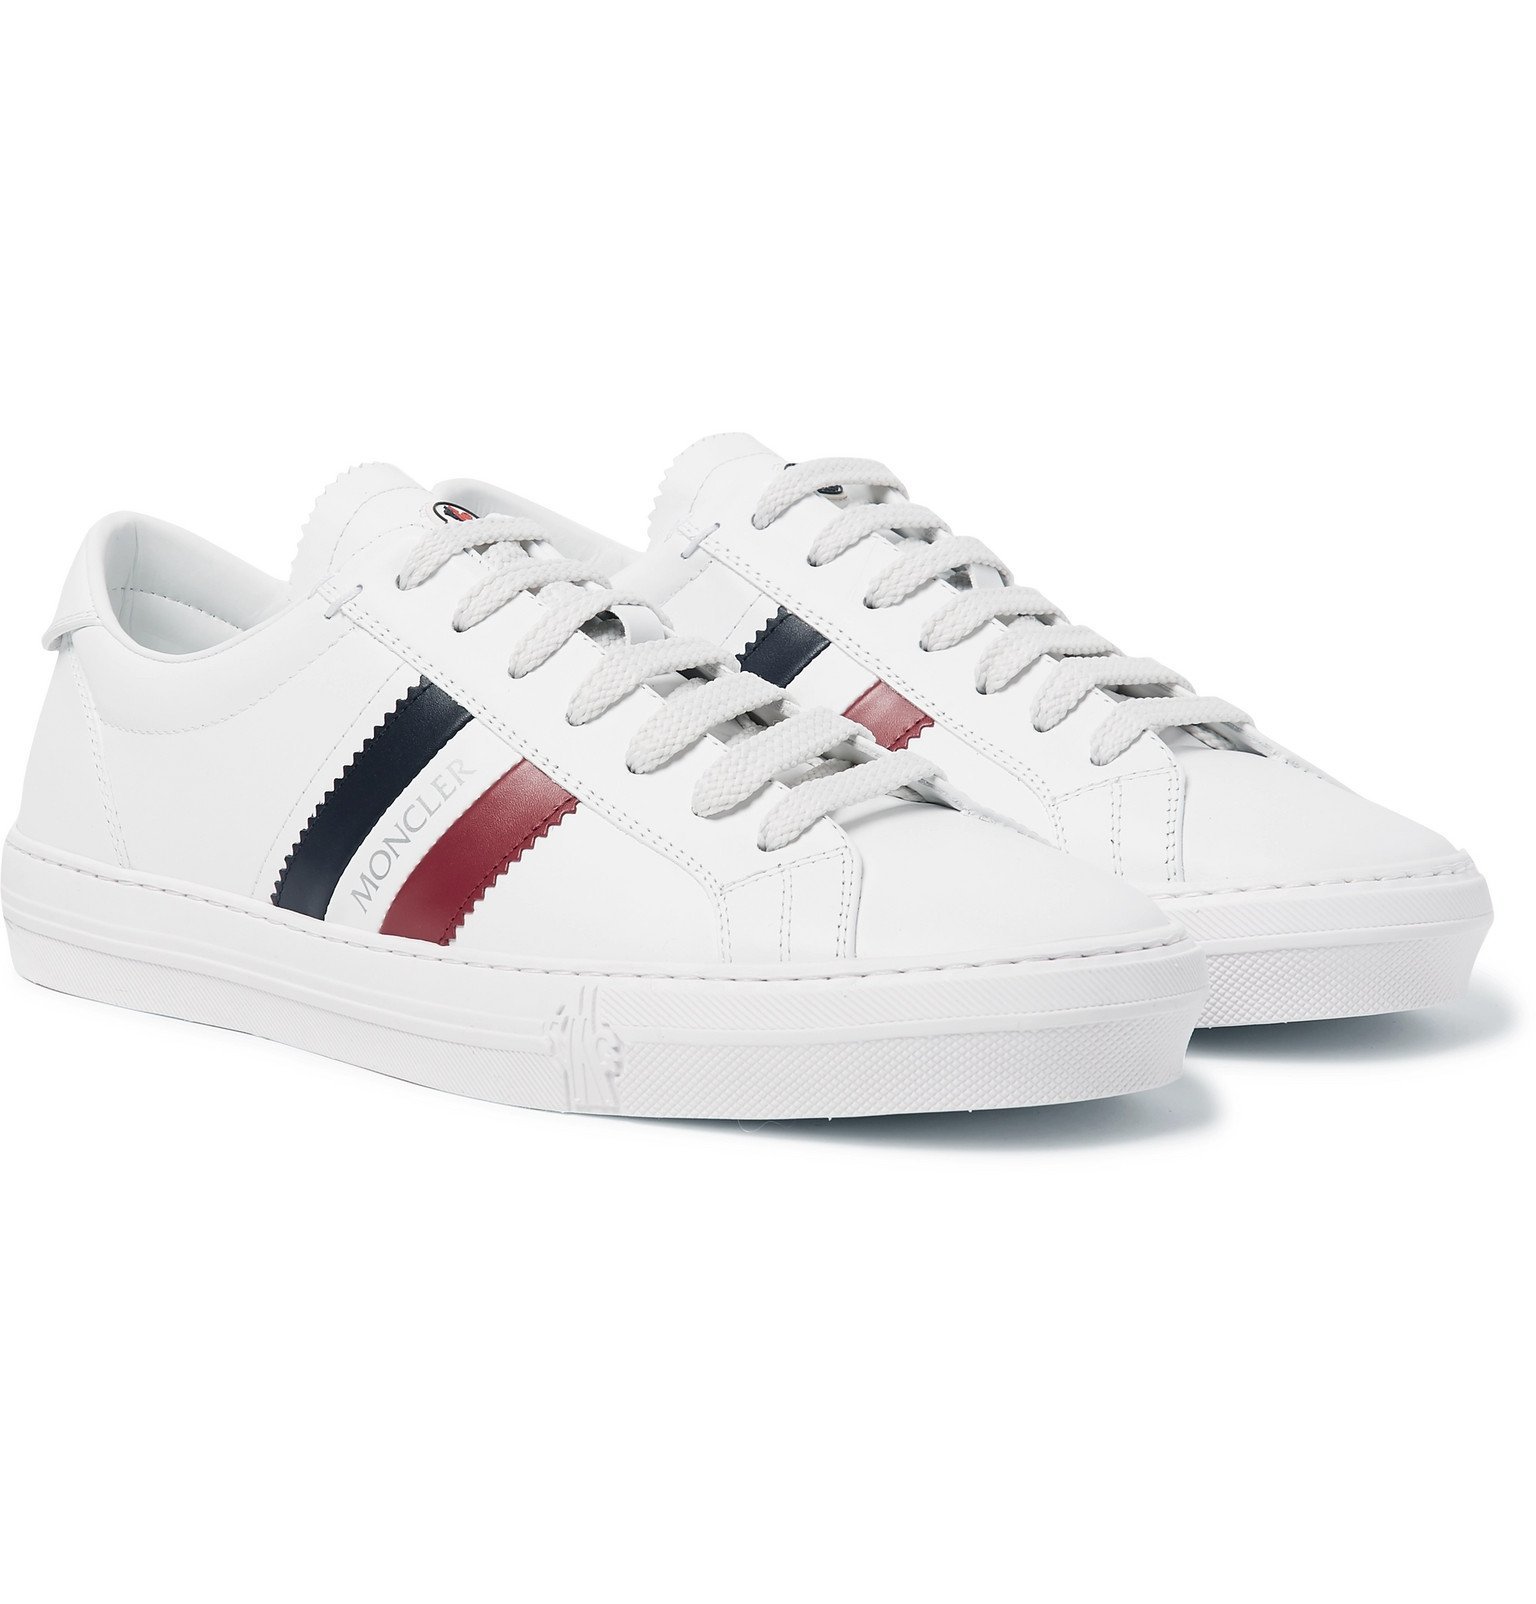 Moncler - New Monaco Striped Leather Sneakers - White Moncler